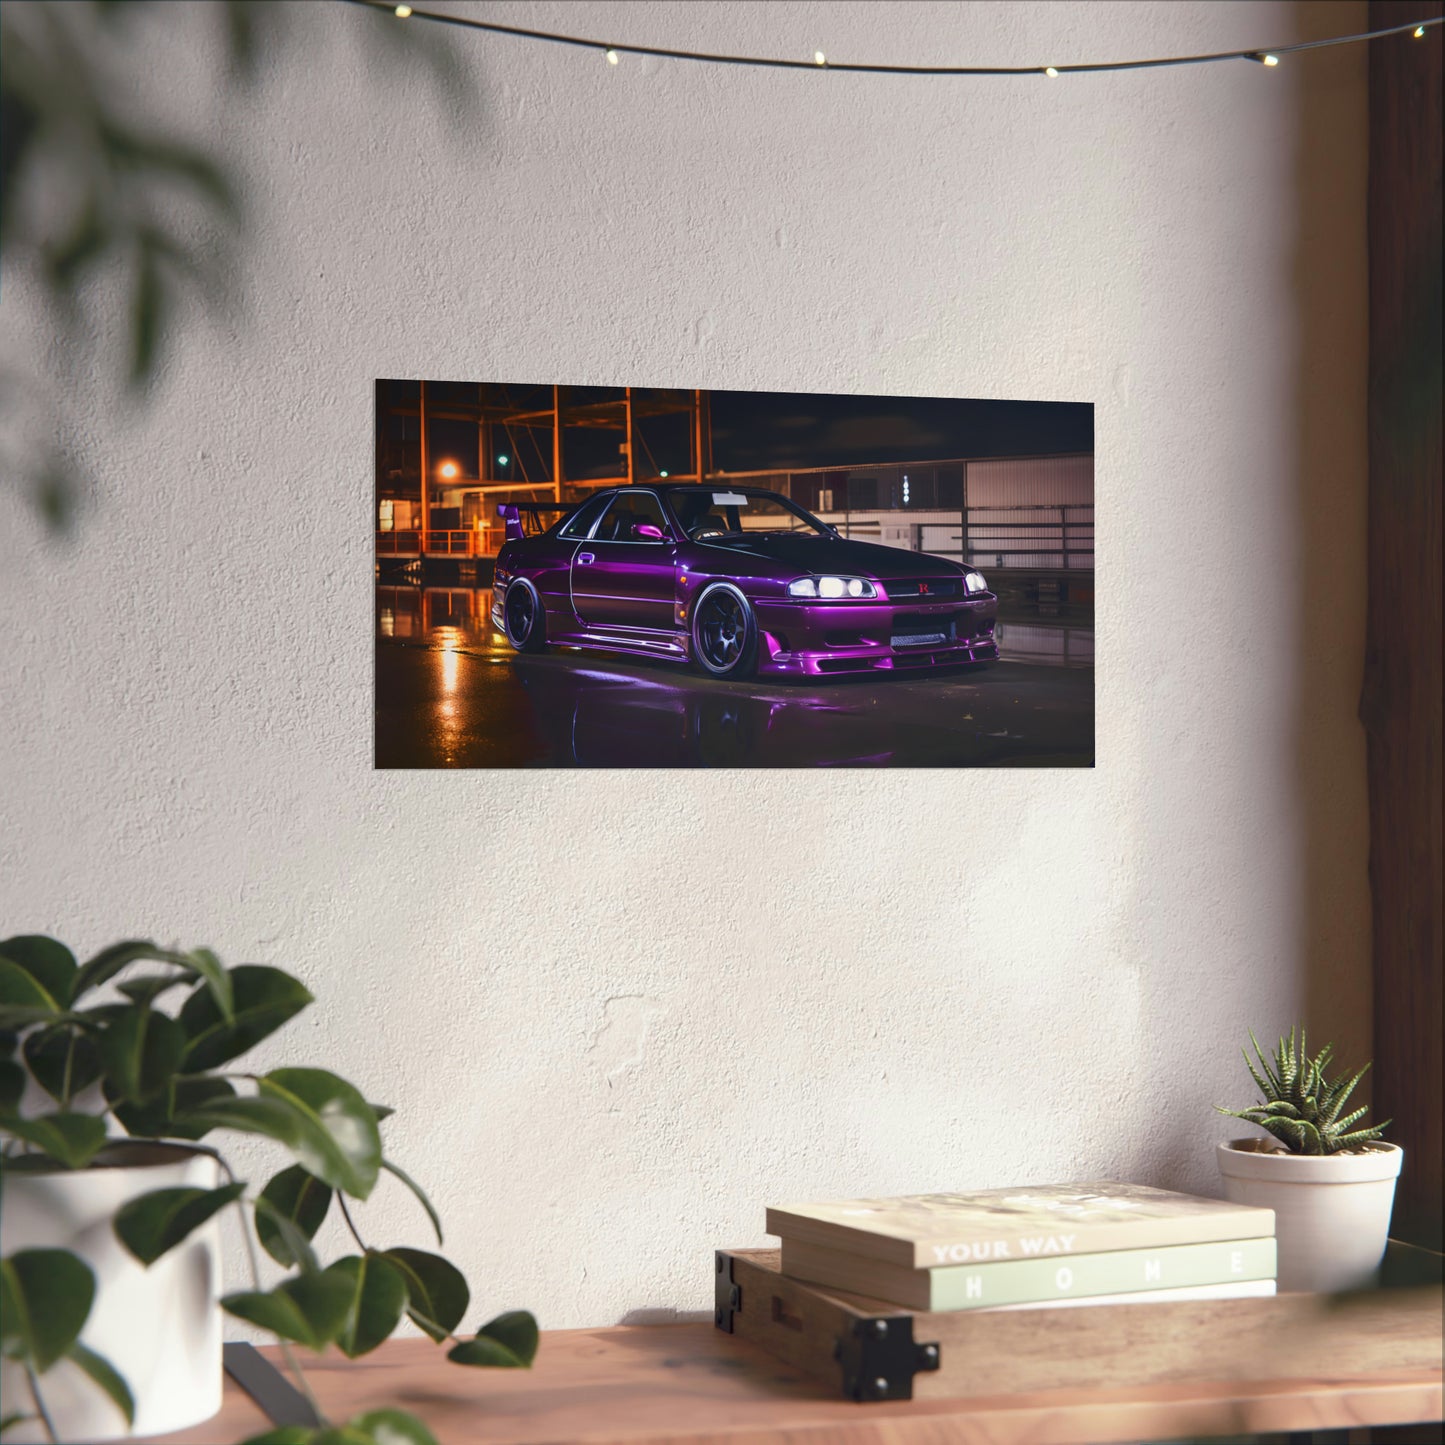 Purple Nissan Skyline Luxury Dream Car Wall Art  Poster Print